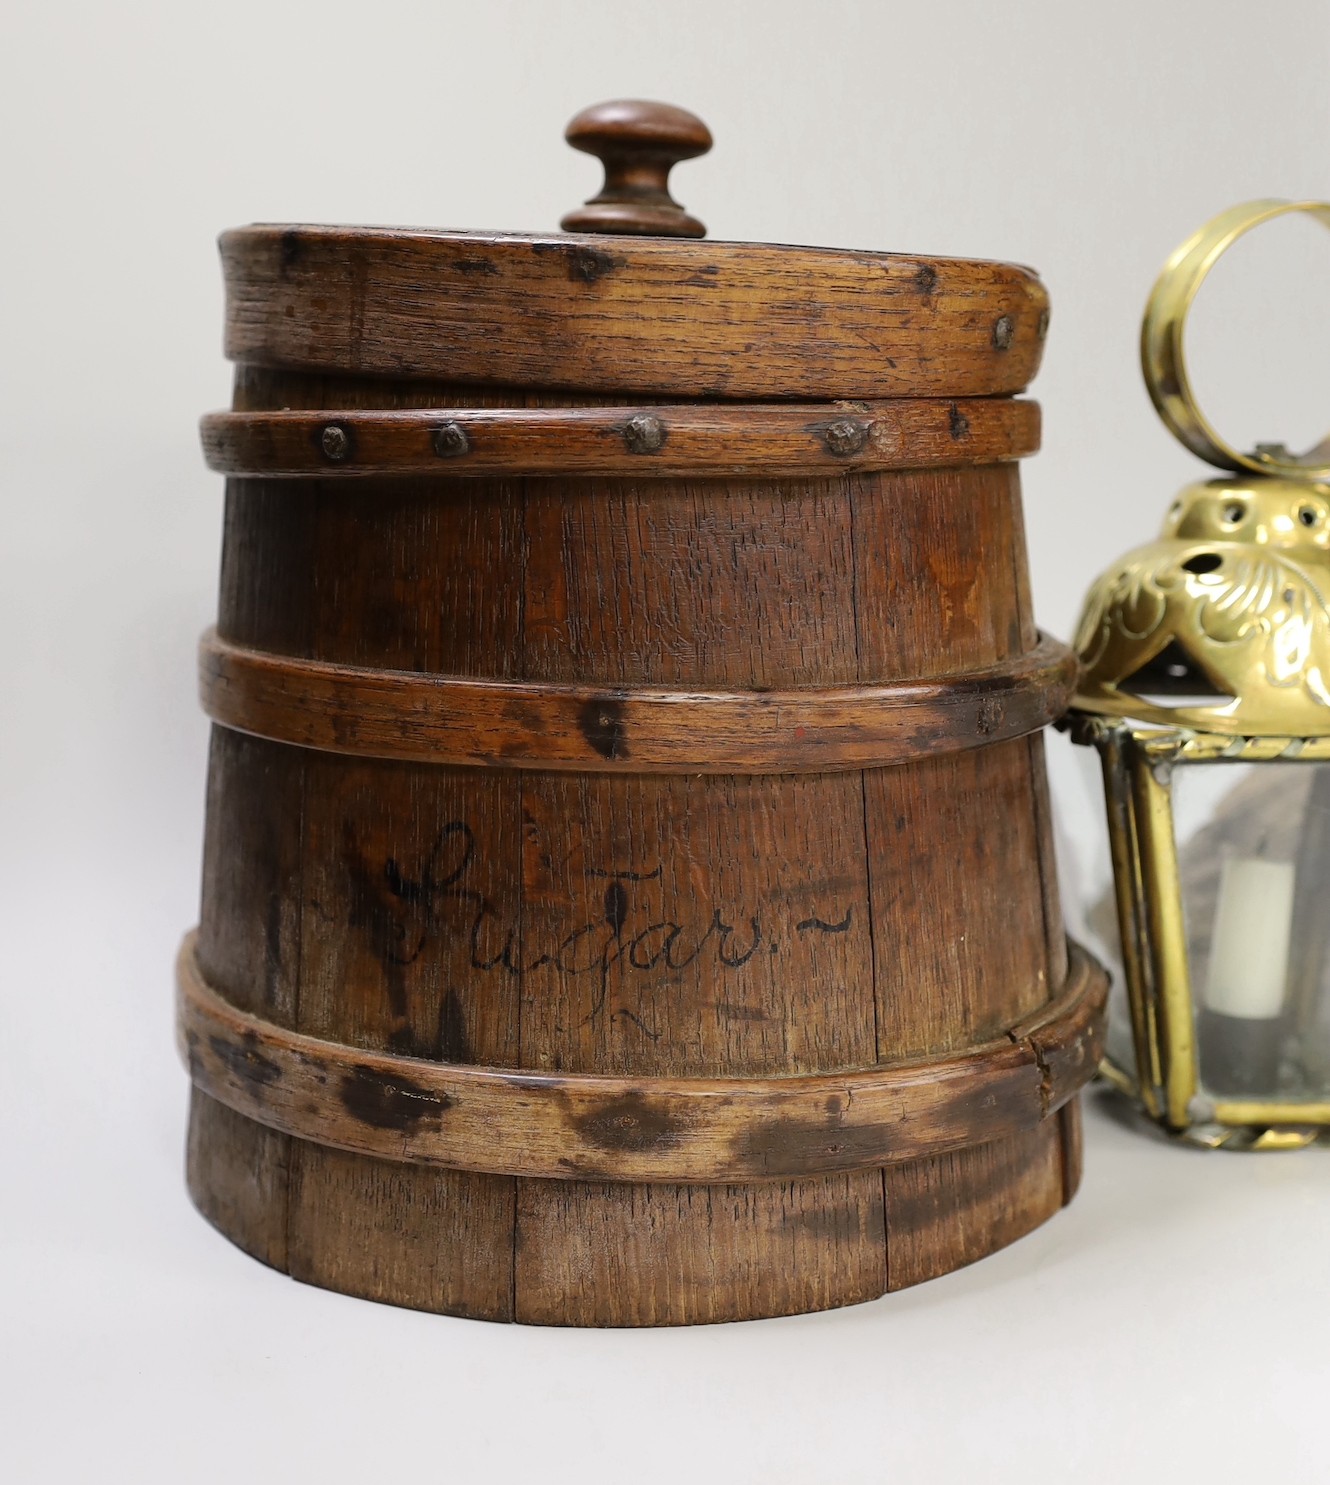 An oak grain measure, a 17th century oak rosette boss and ceiling pendant candle lantern